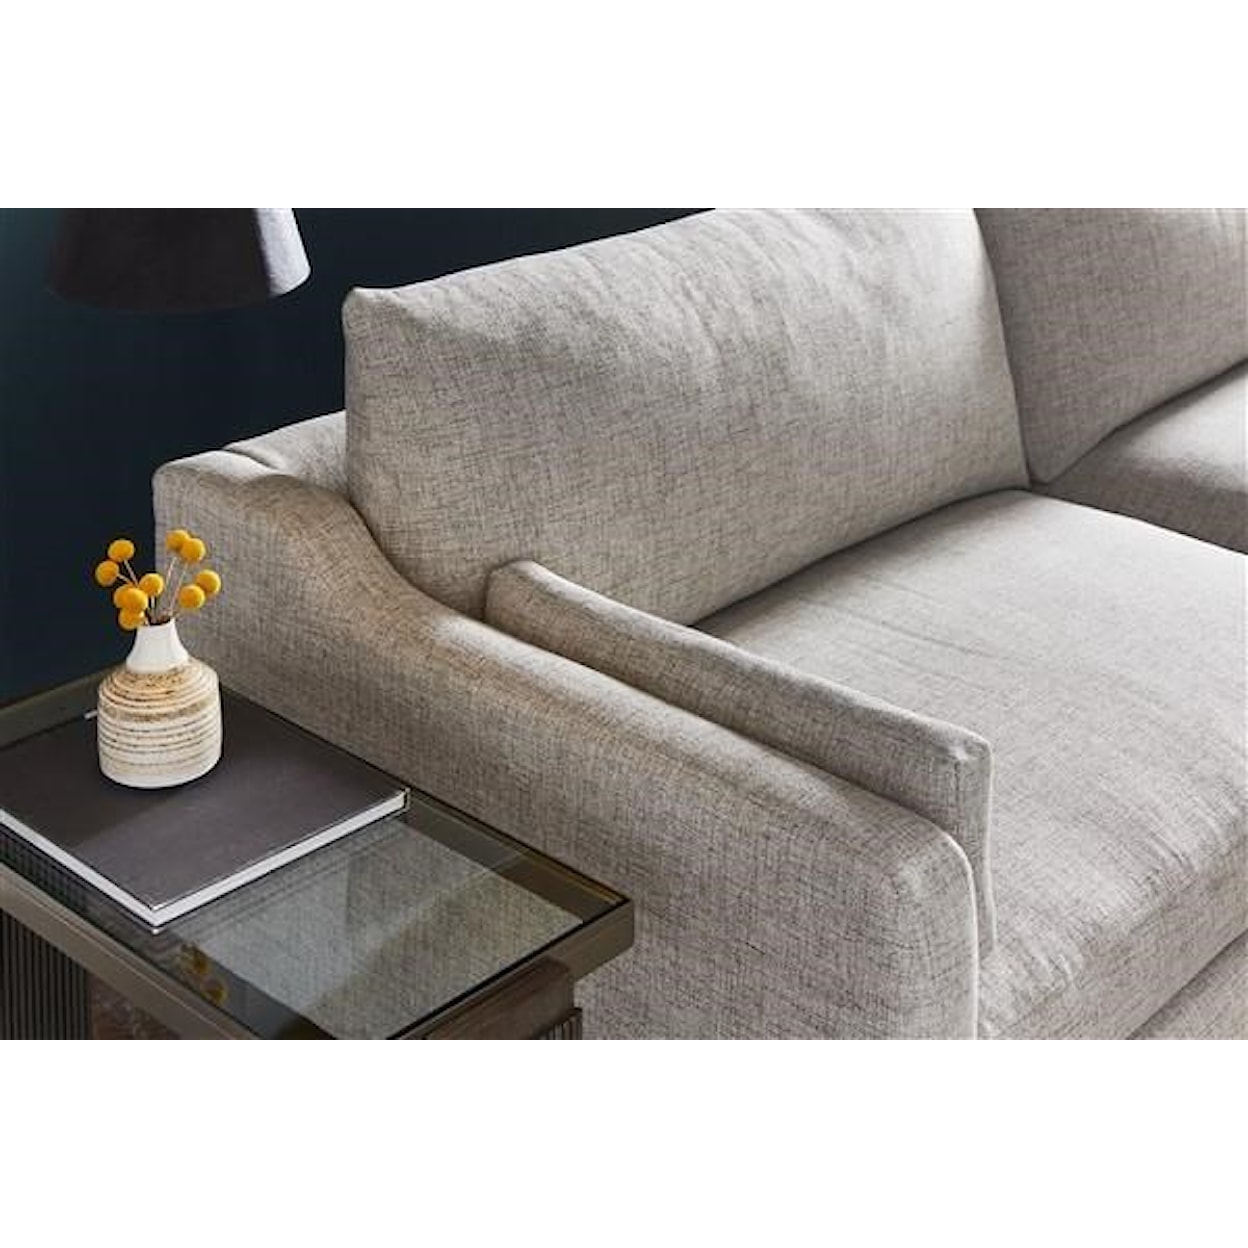 Vanguard Furniture Thea - Ease Upholstery Thea Chair